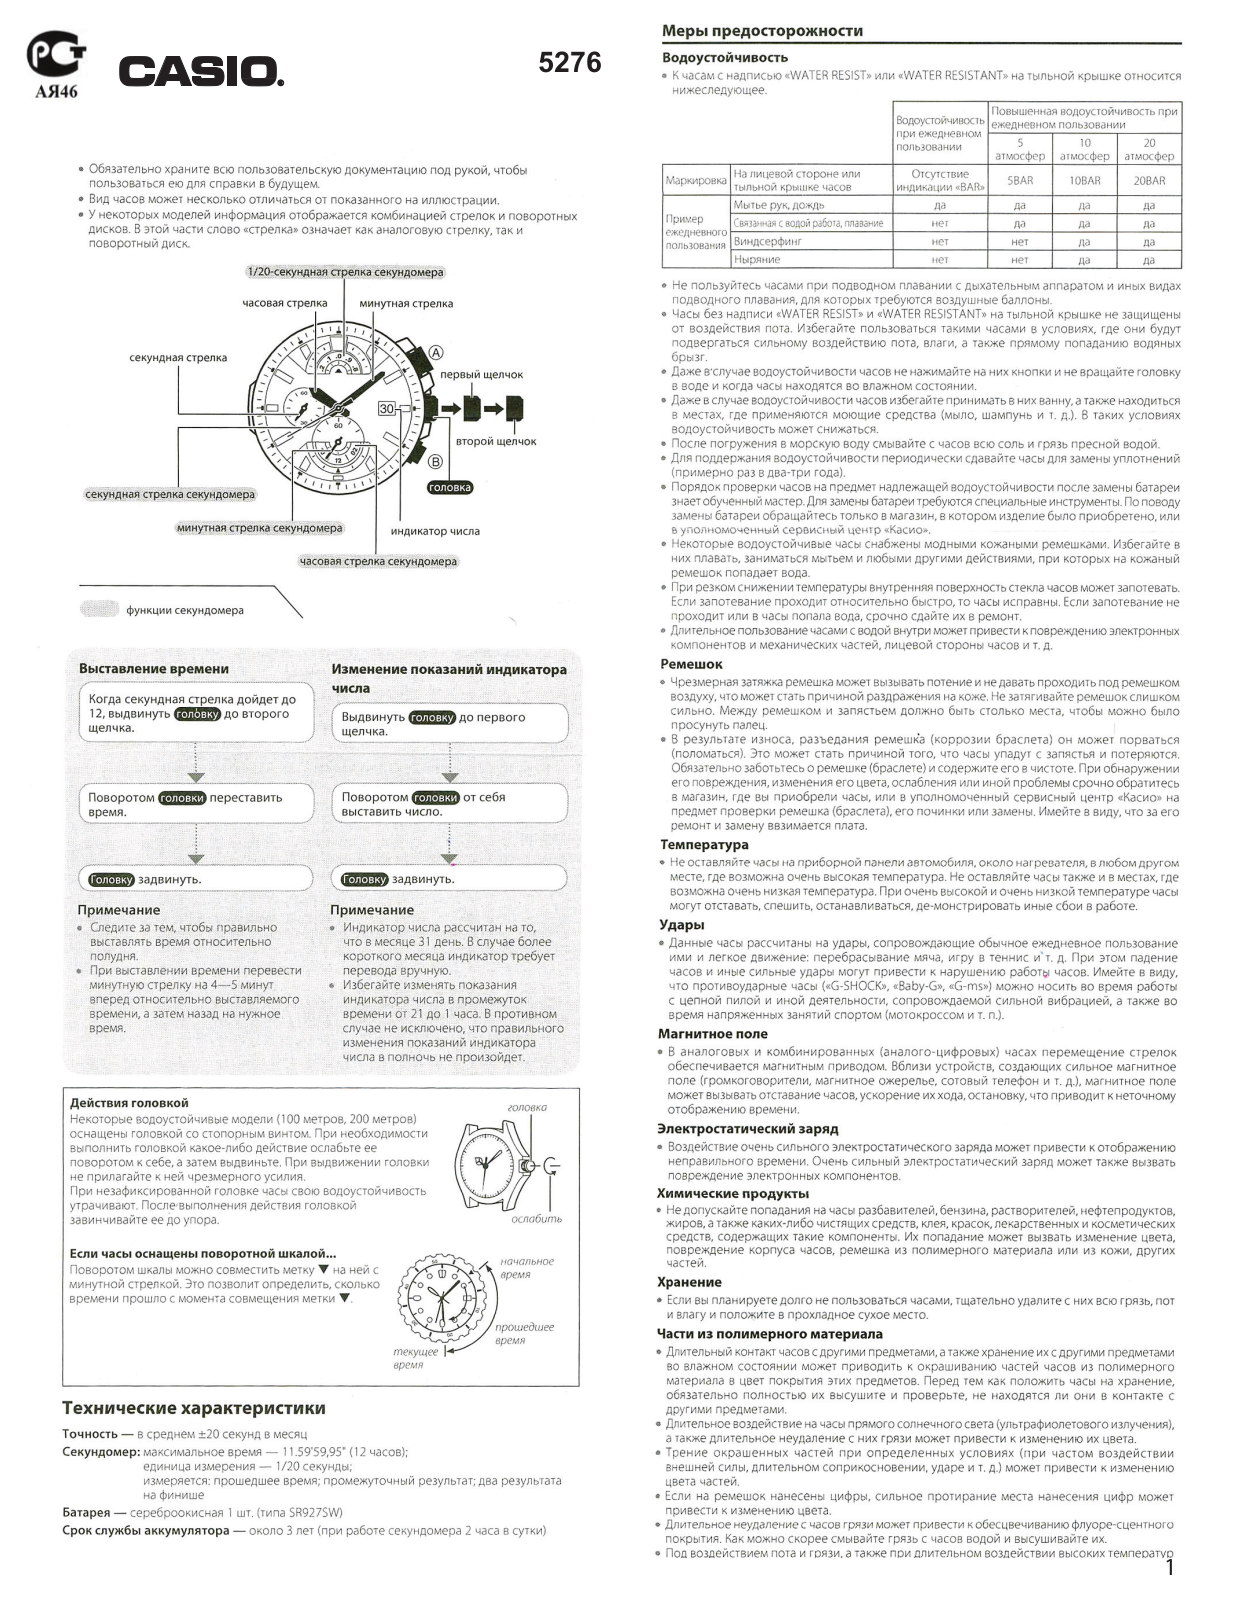 Casio EFR-540RB-1A User Manual